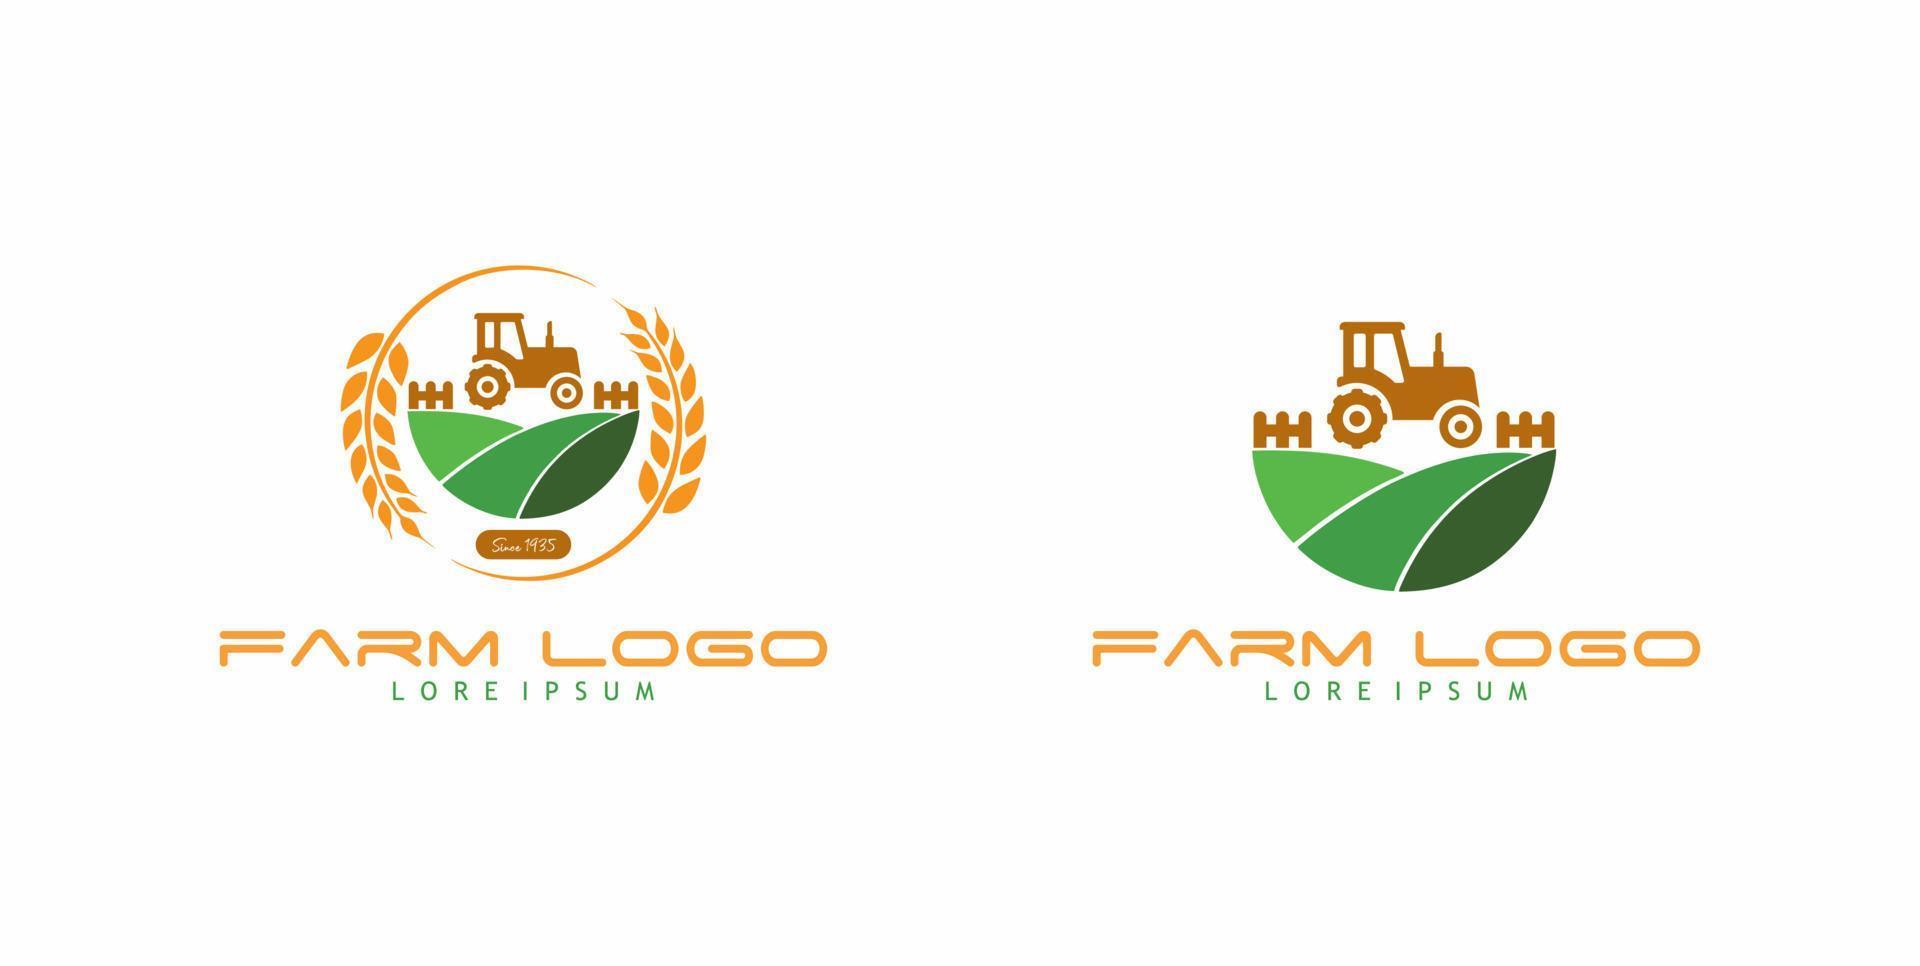 Design des Logos der Farmfirma vektor